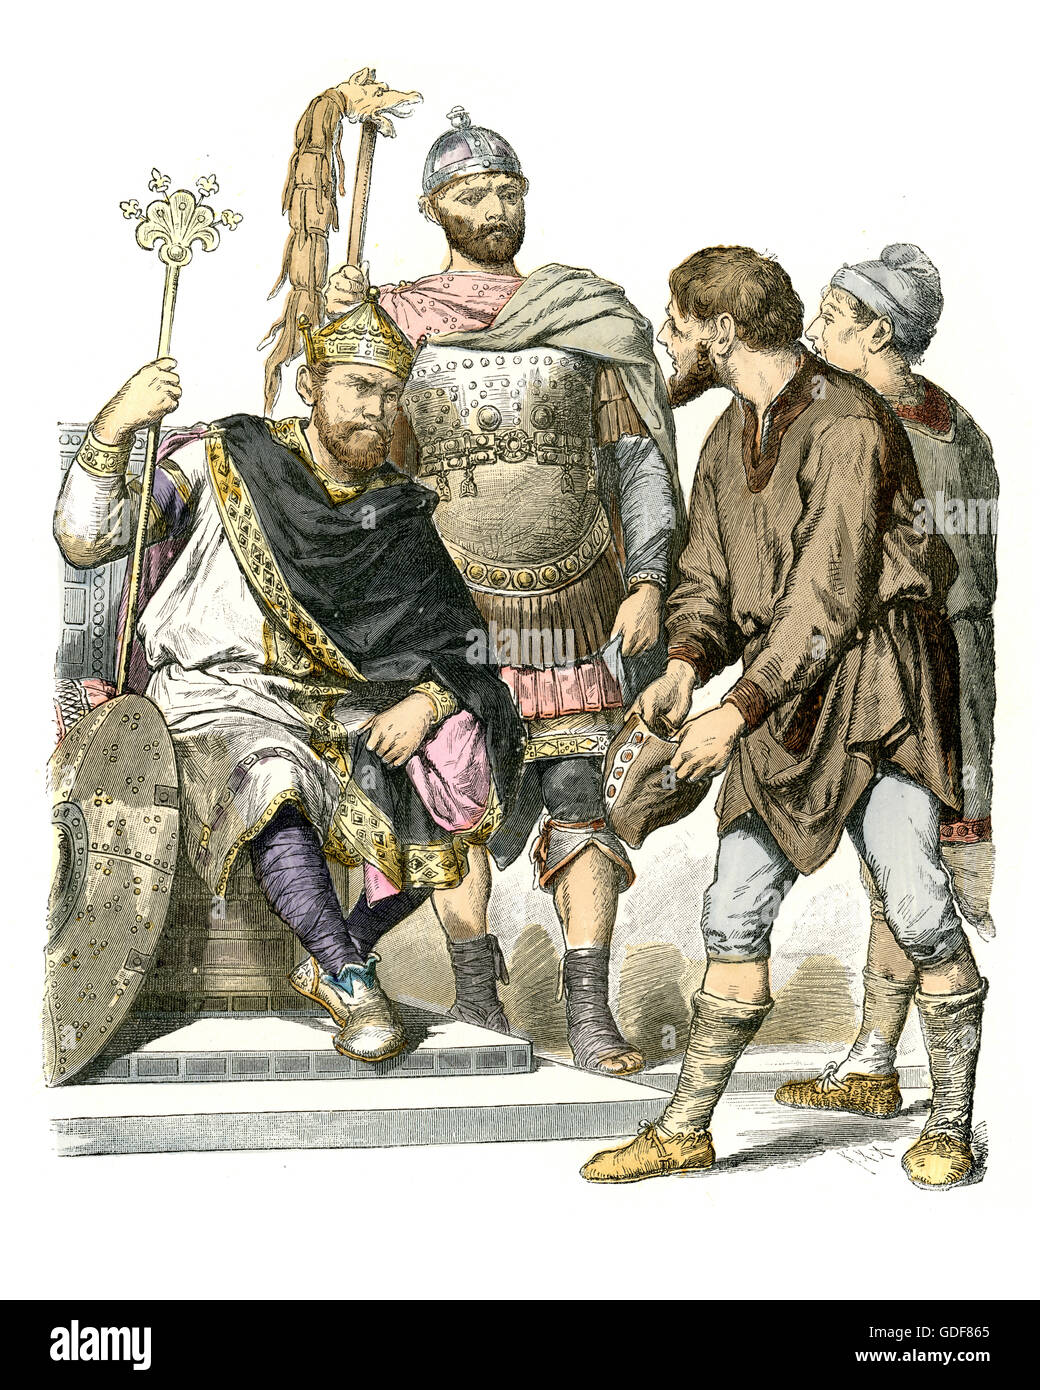 Costumes of the Carolingian era, 700 to 800 AD, King, Warrior and peasants Stock Photo